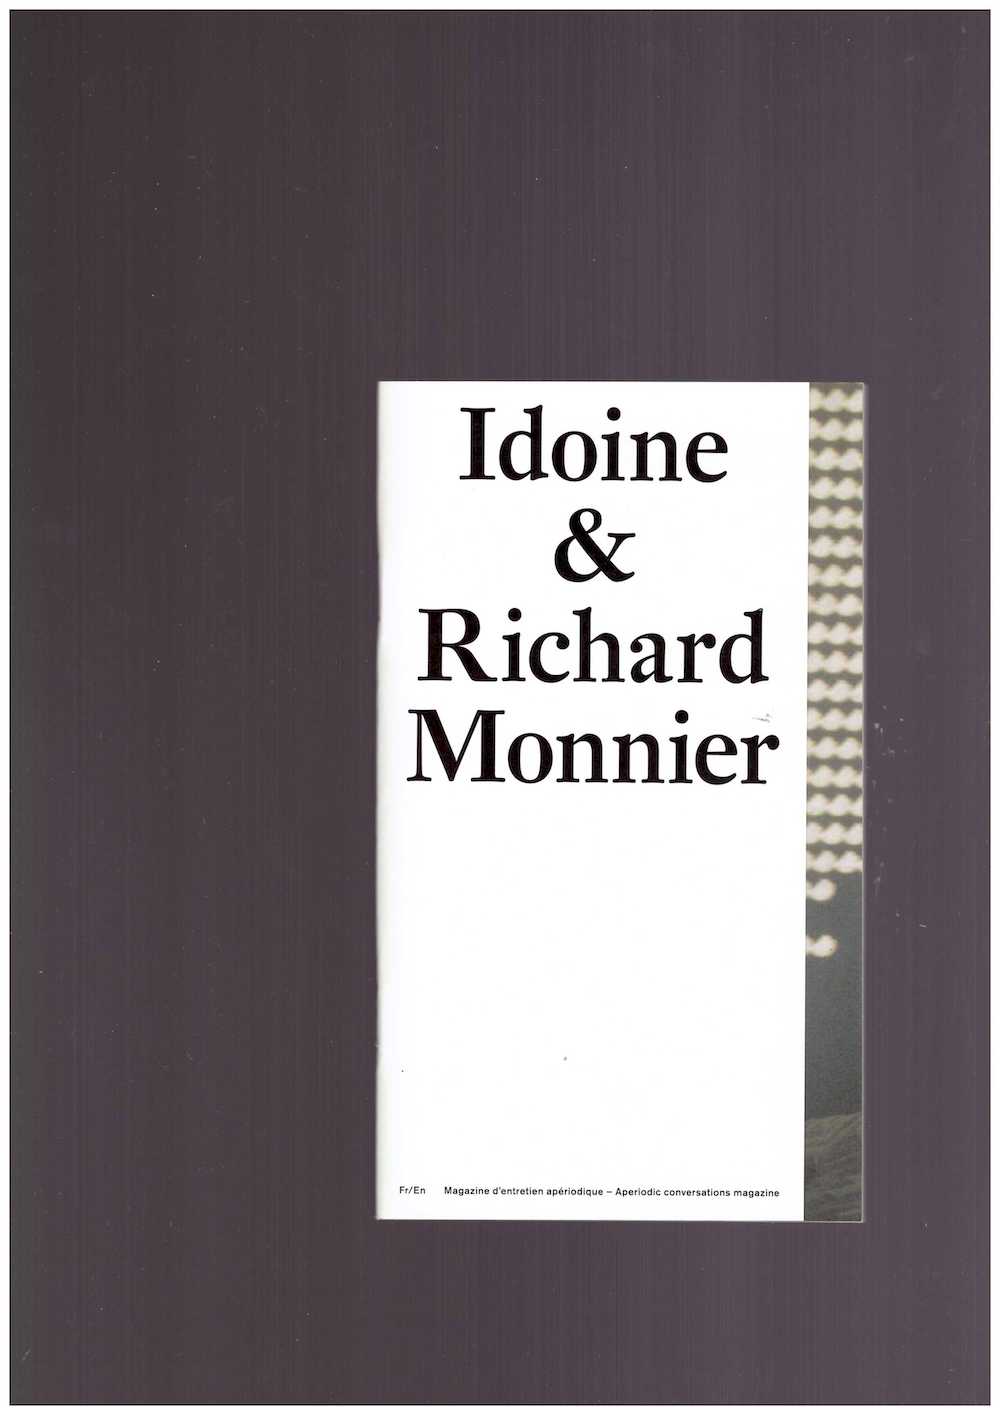 PANO-ZAVARONI, Éléonore; RIOU, Pascale (eds.) - IDOINE - Richard Monnier